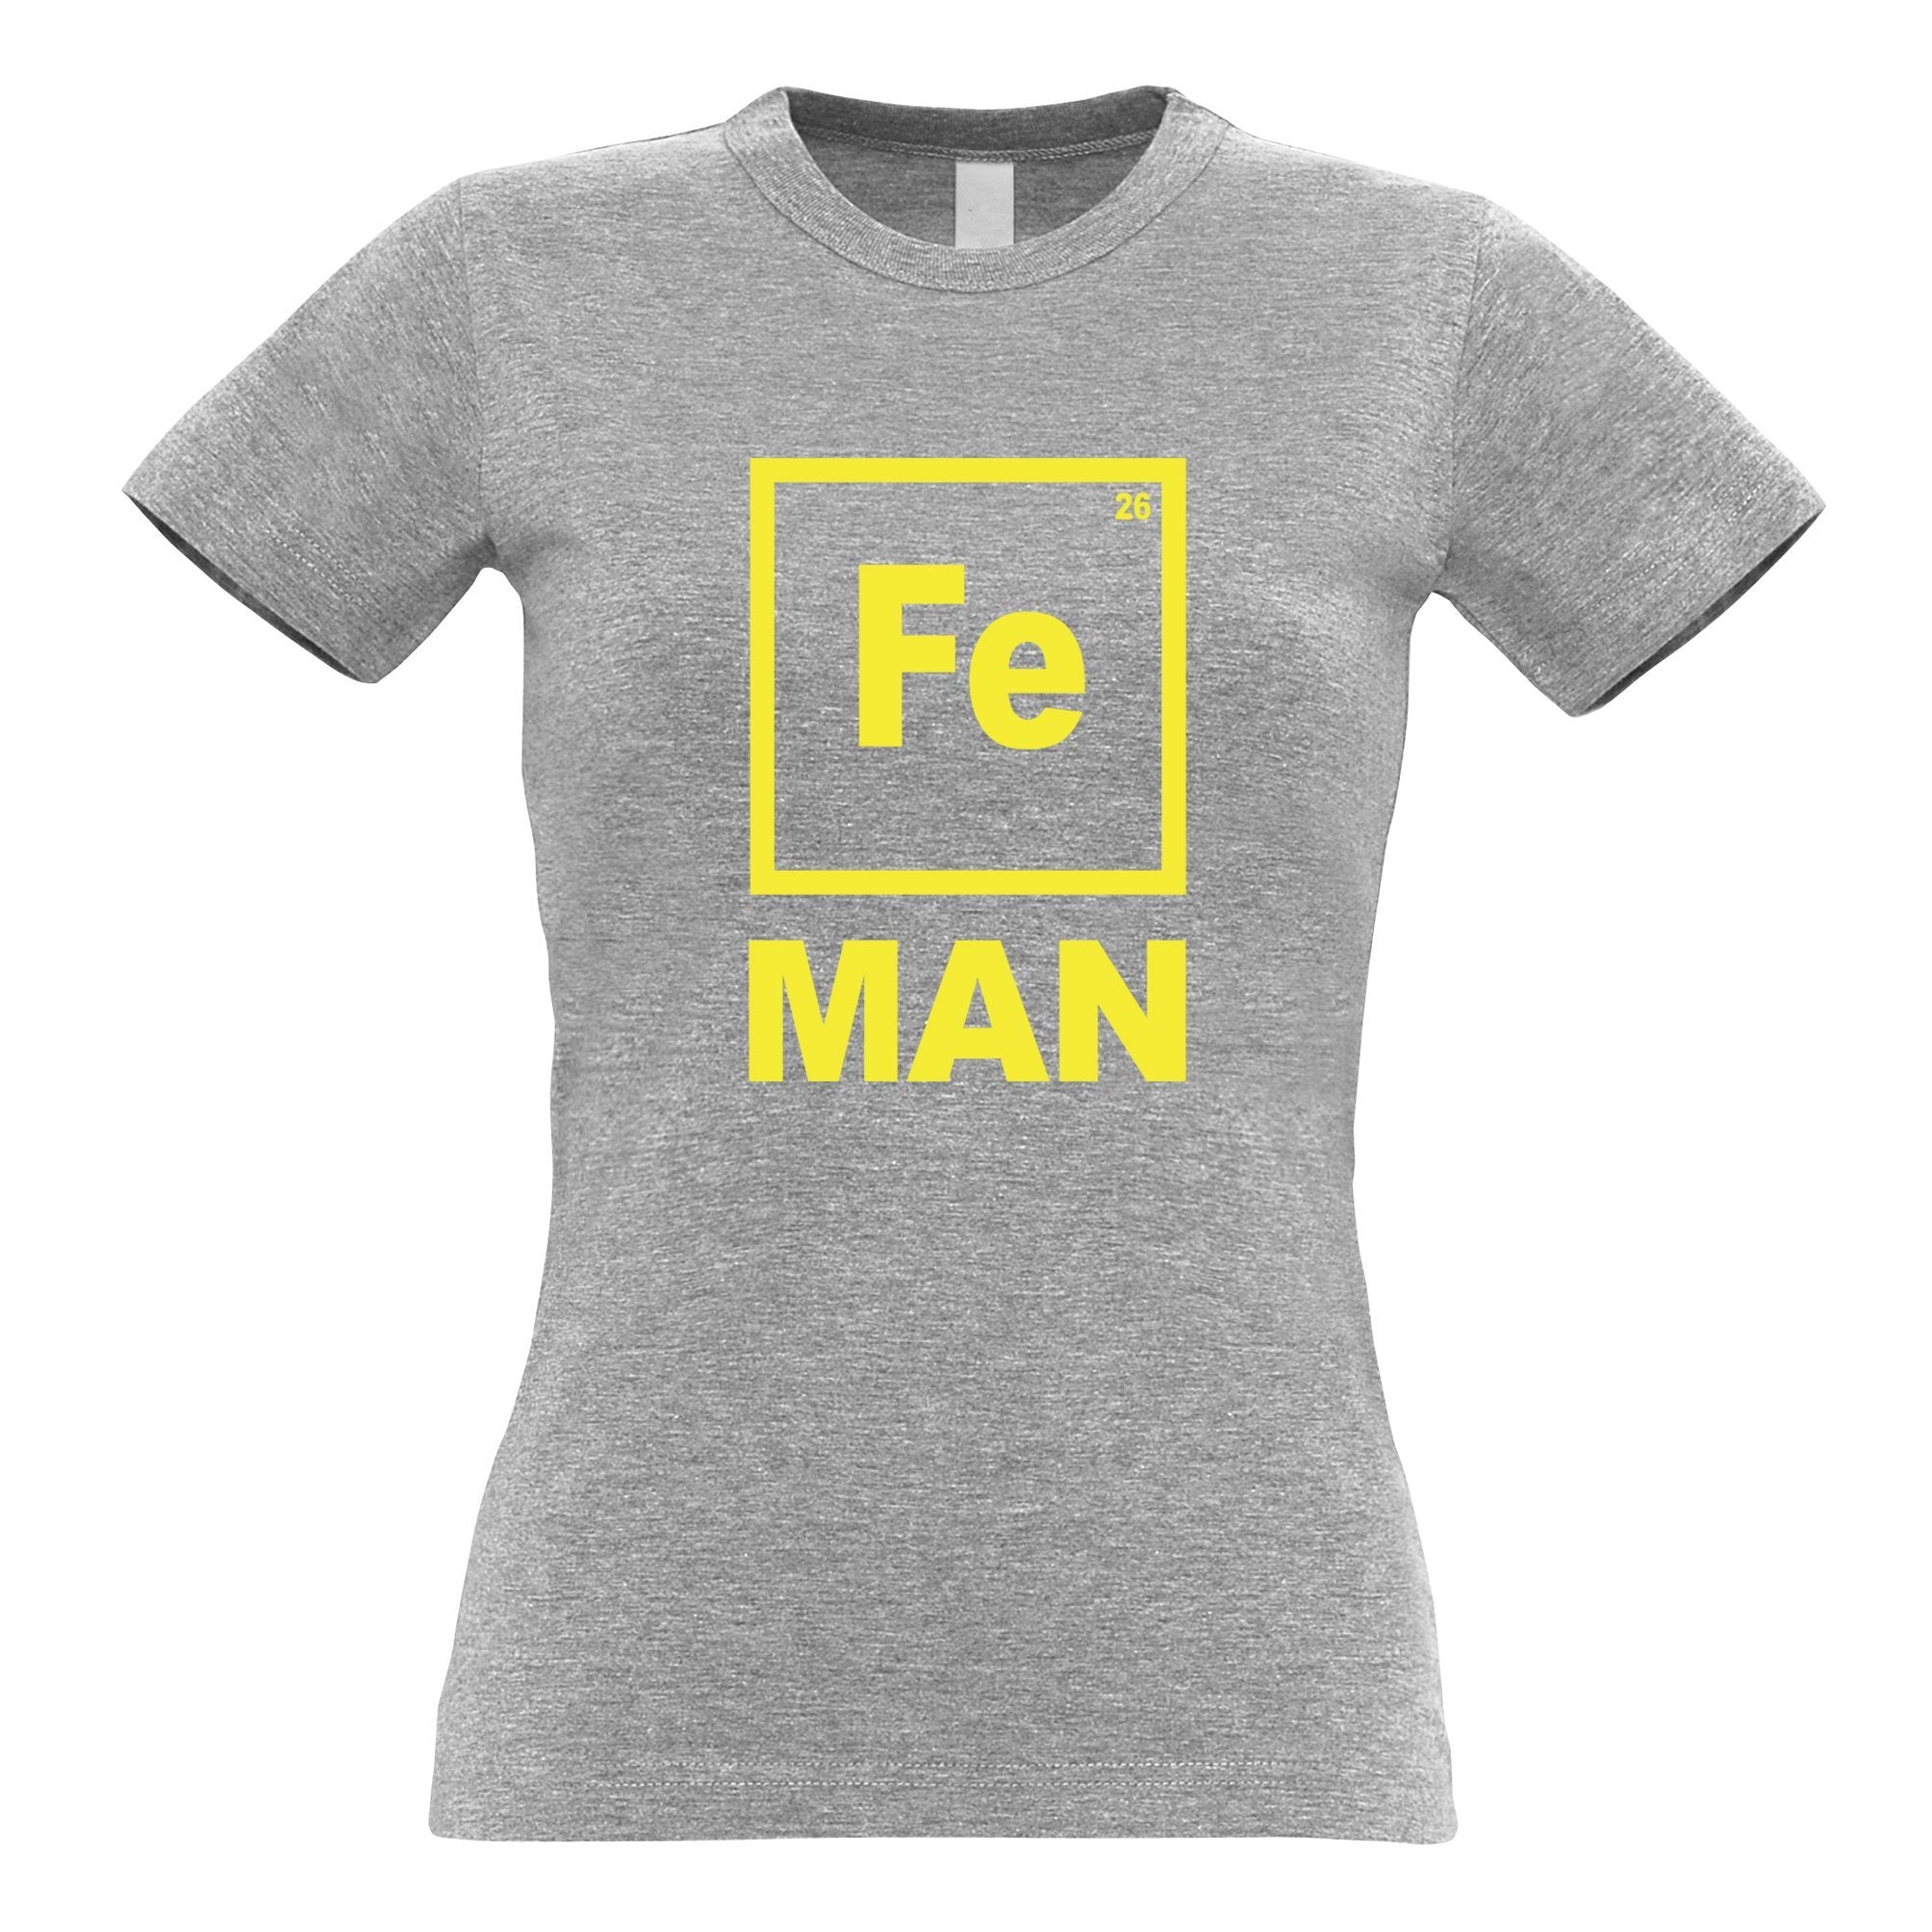 Fe Iron Man Chemistry Womens T Shirt